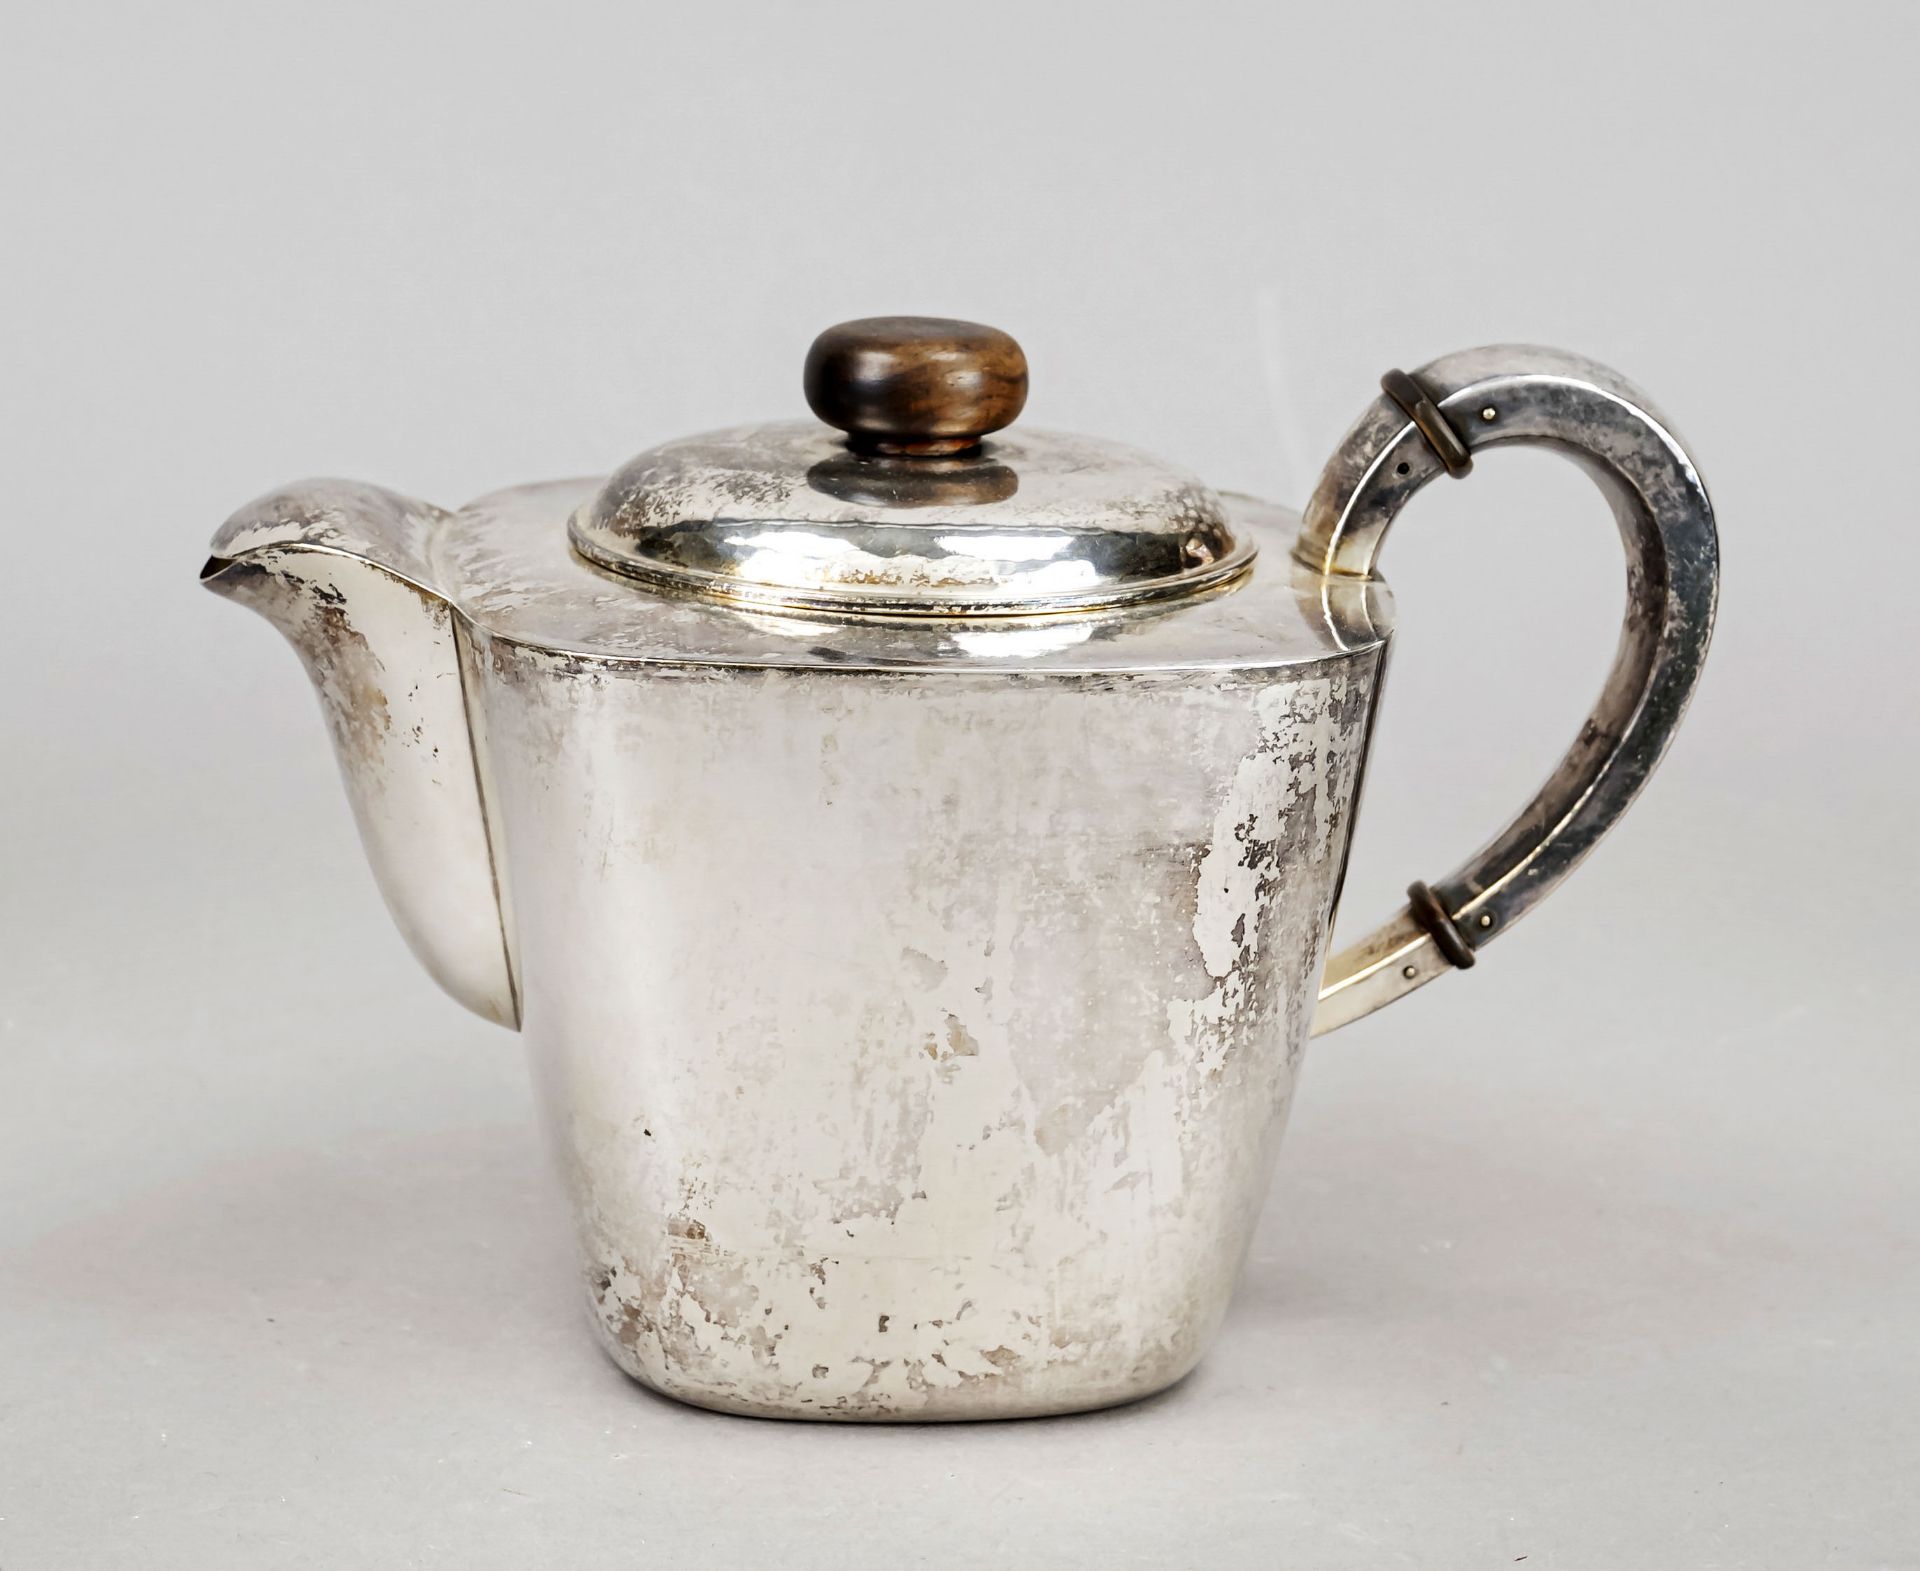 Art Deco teapot, German, c. 1920/30, maker's mark M. H. Wilkens & Söhne, Bremen-Hemelingen, silver